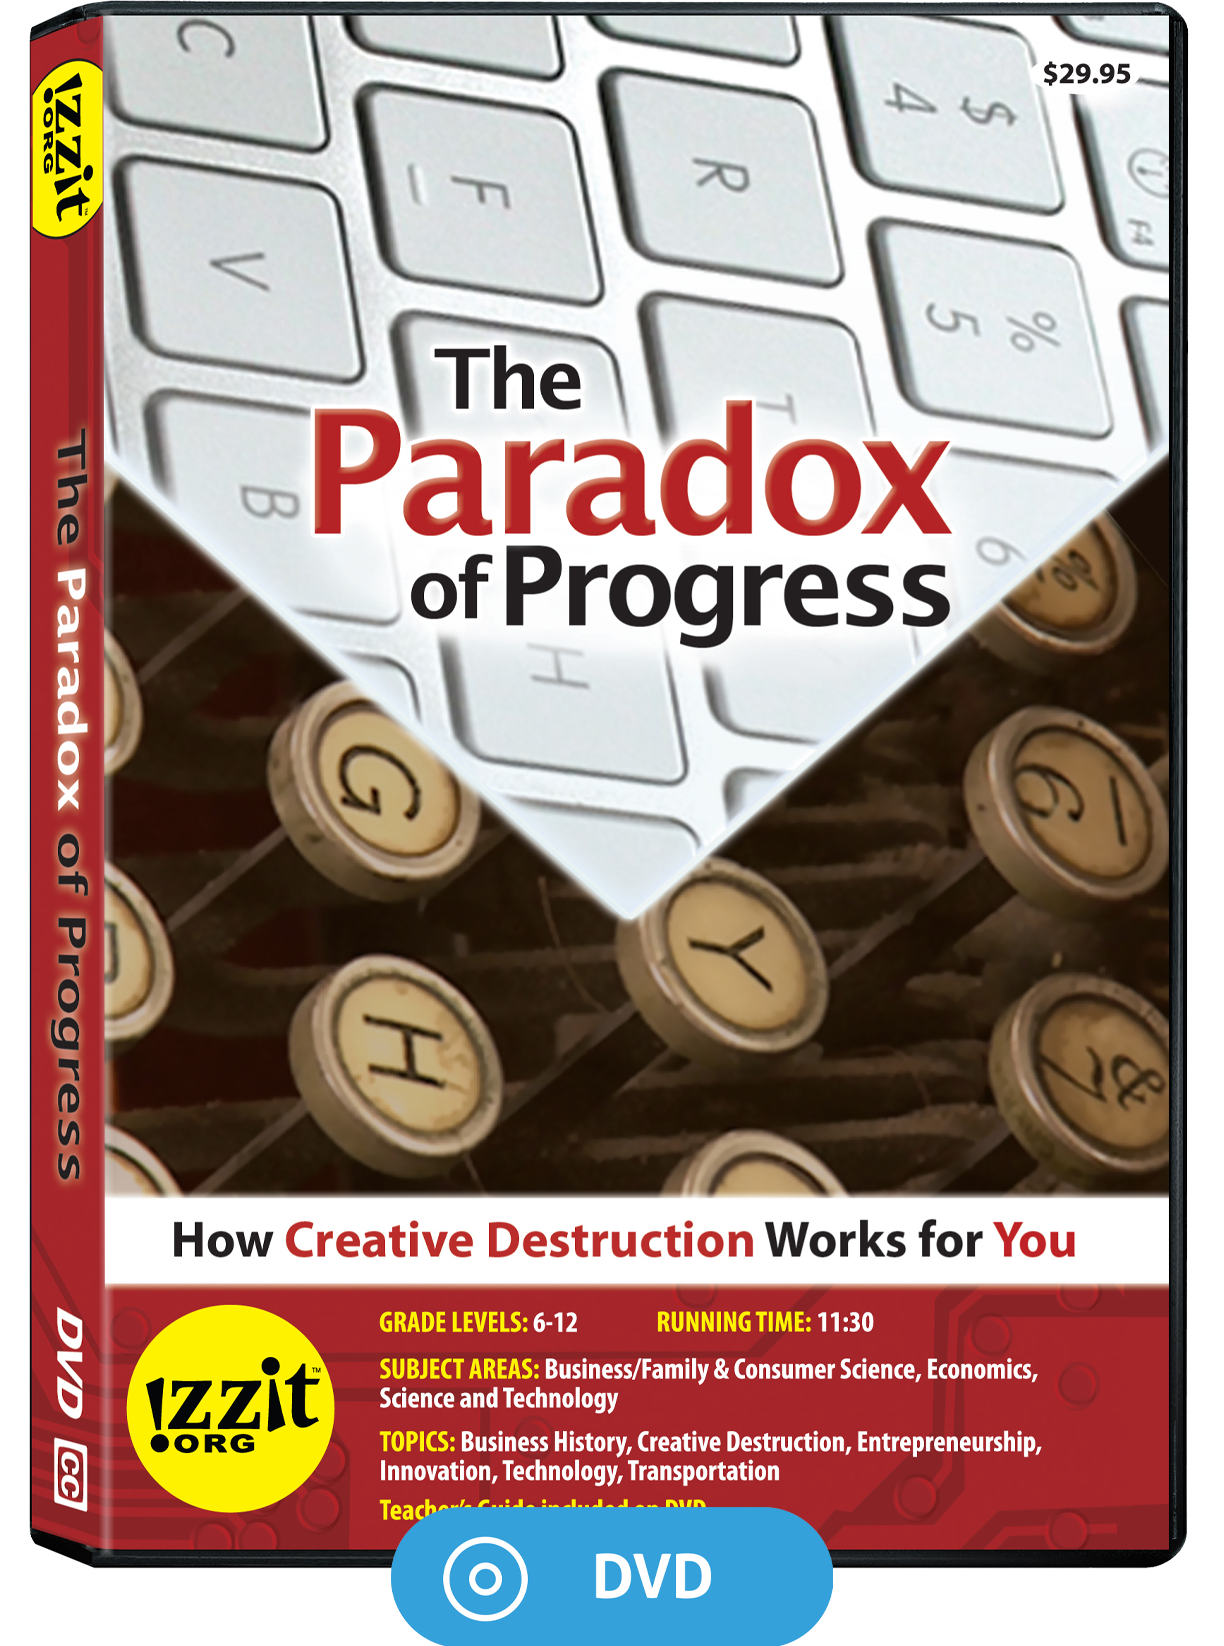 The Paradox of Progress DVD